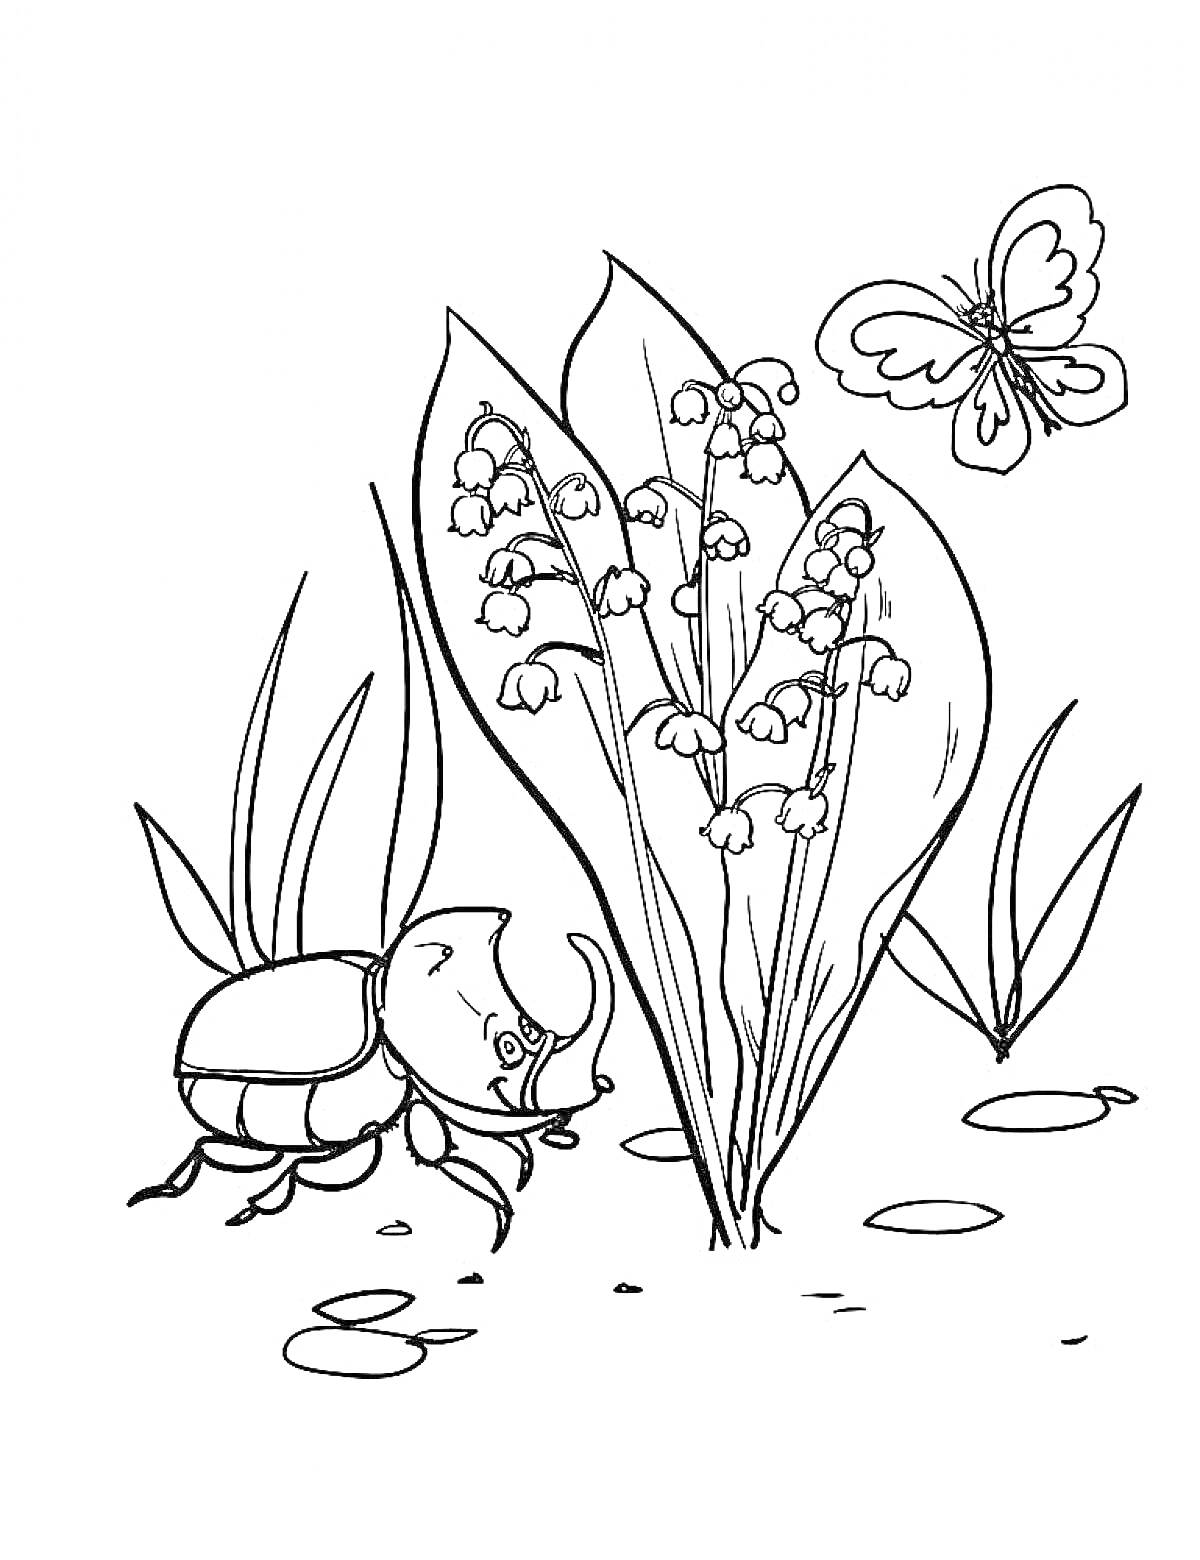 Ландыш, жук и бабочка на траве